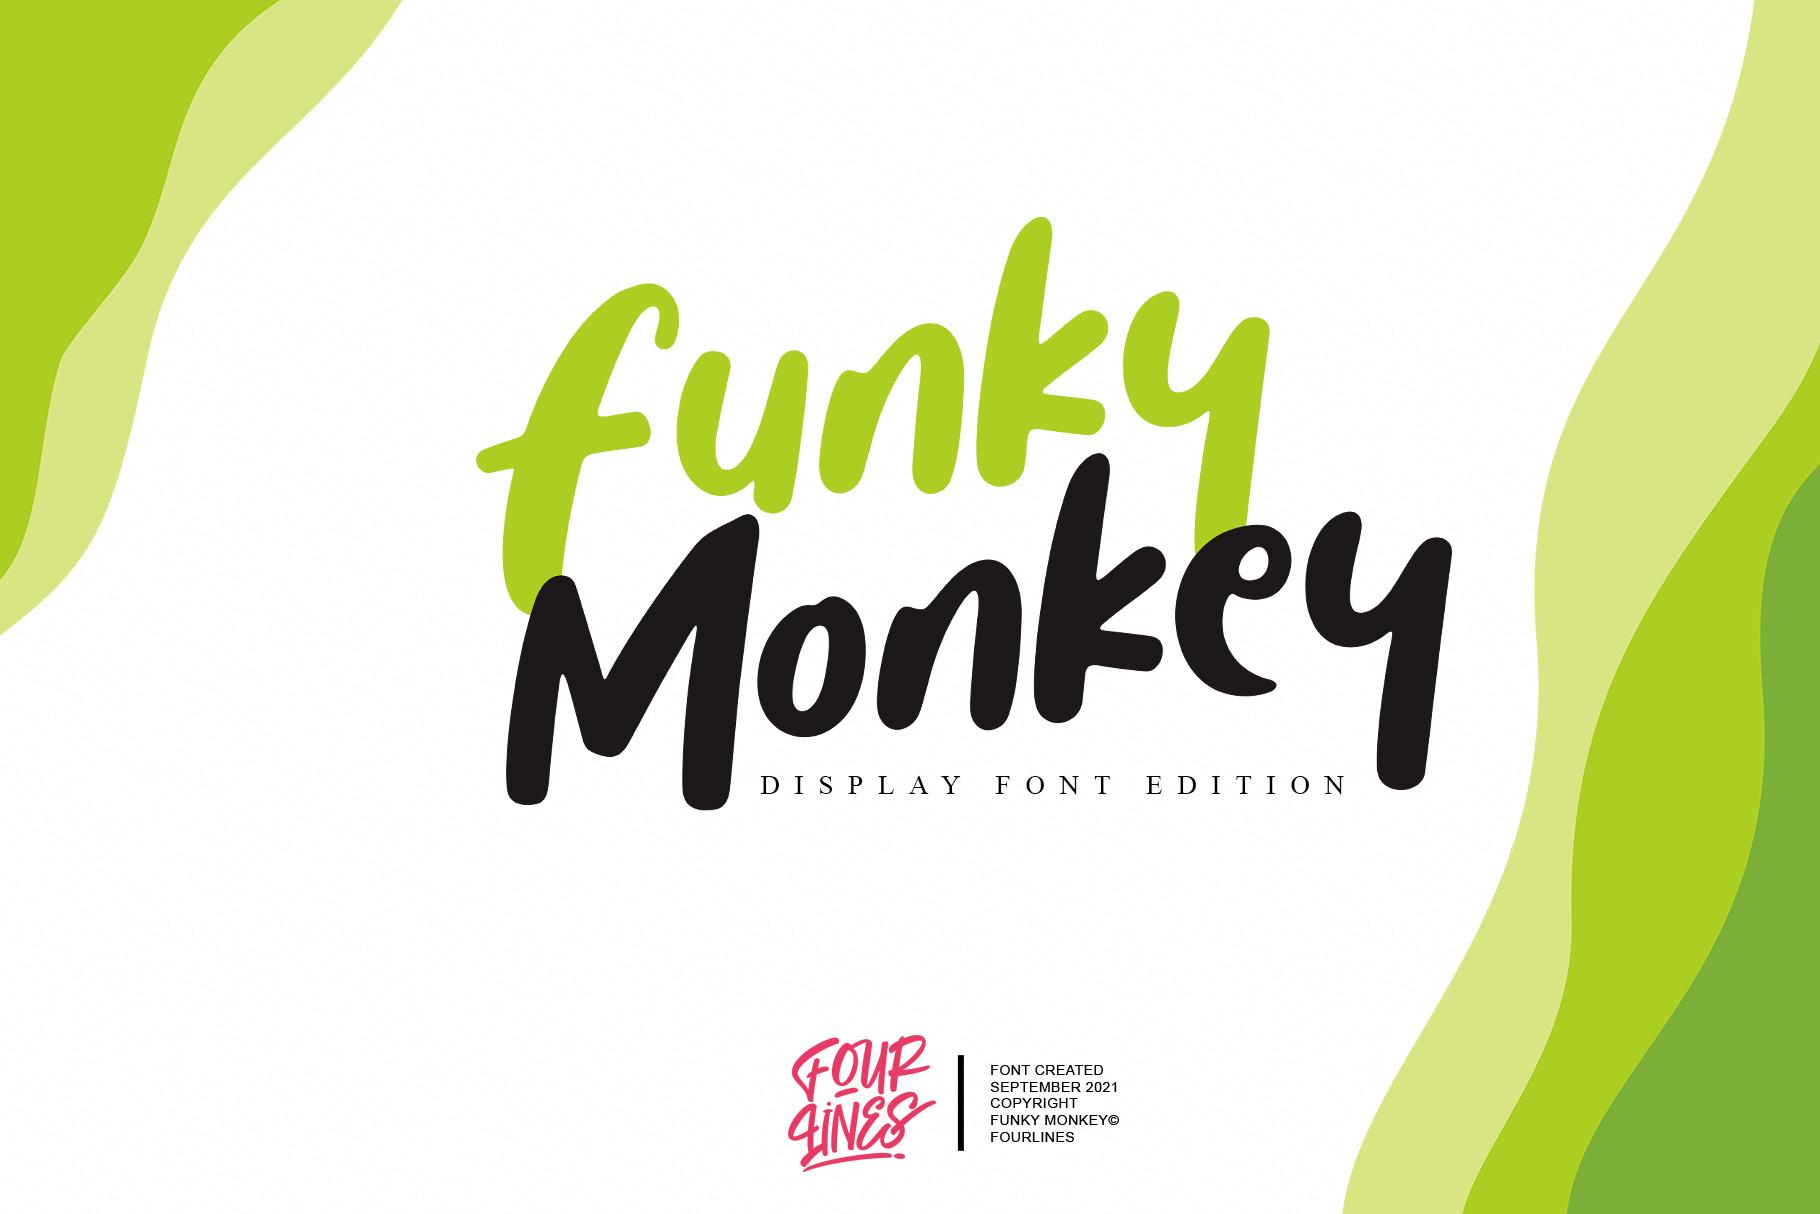 Funky Monkey Font